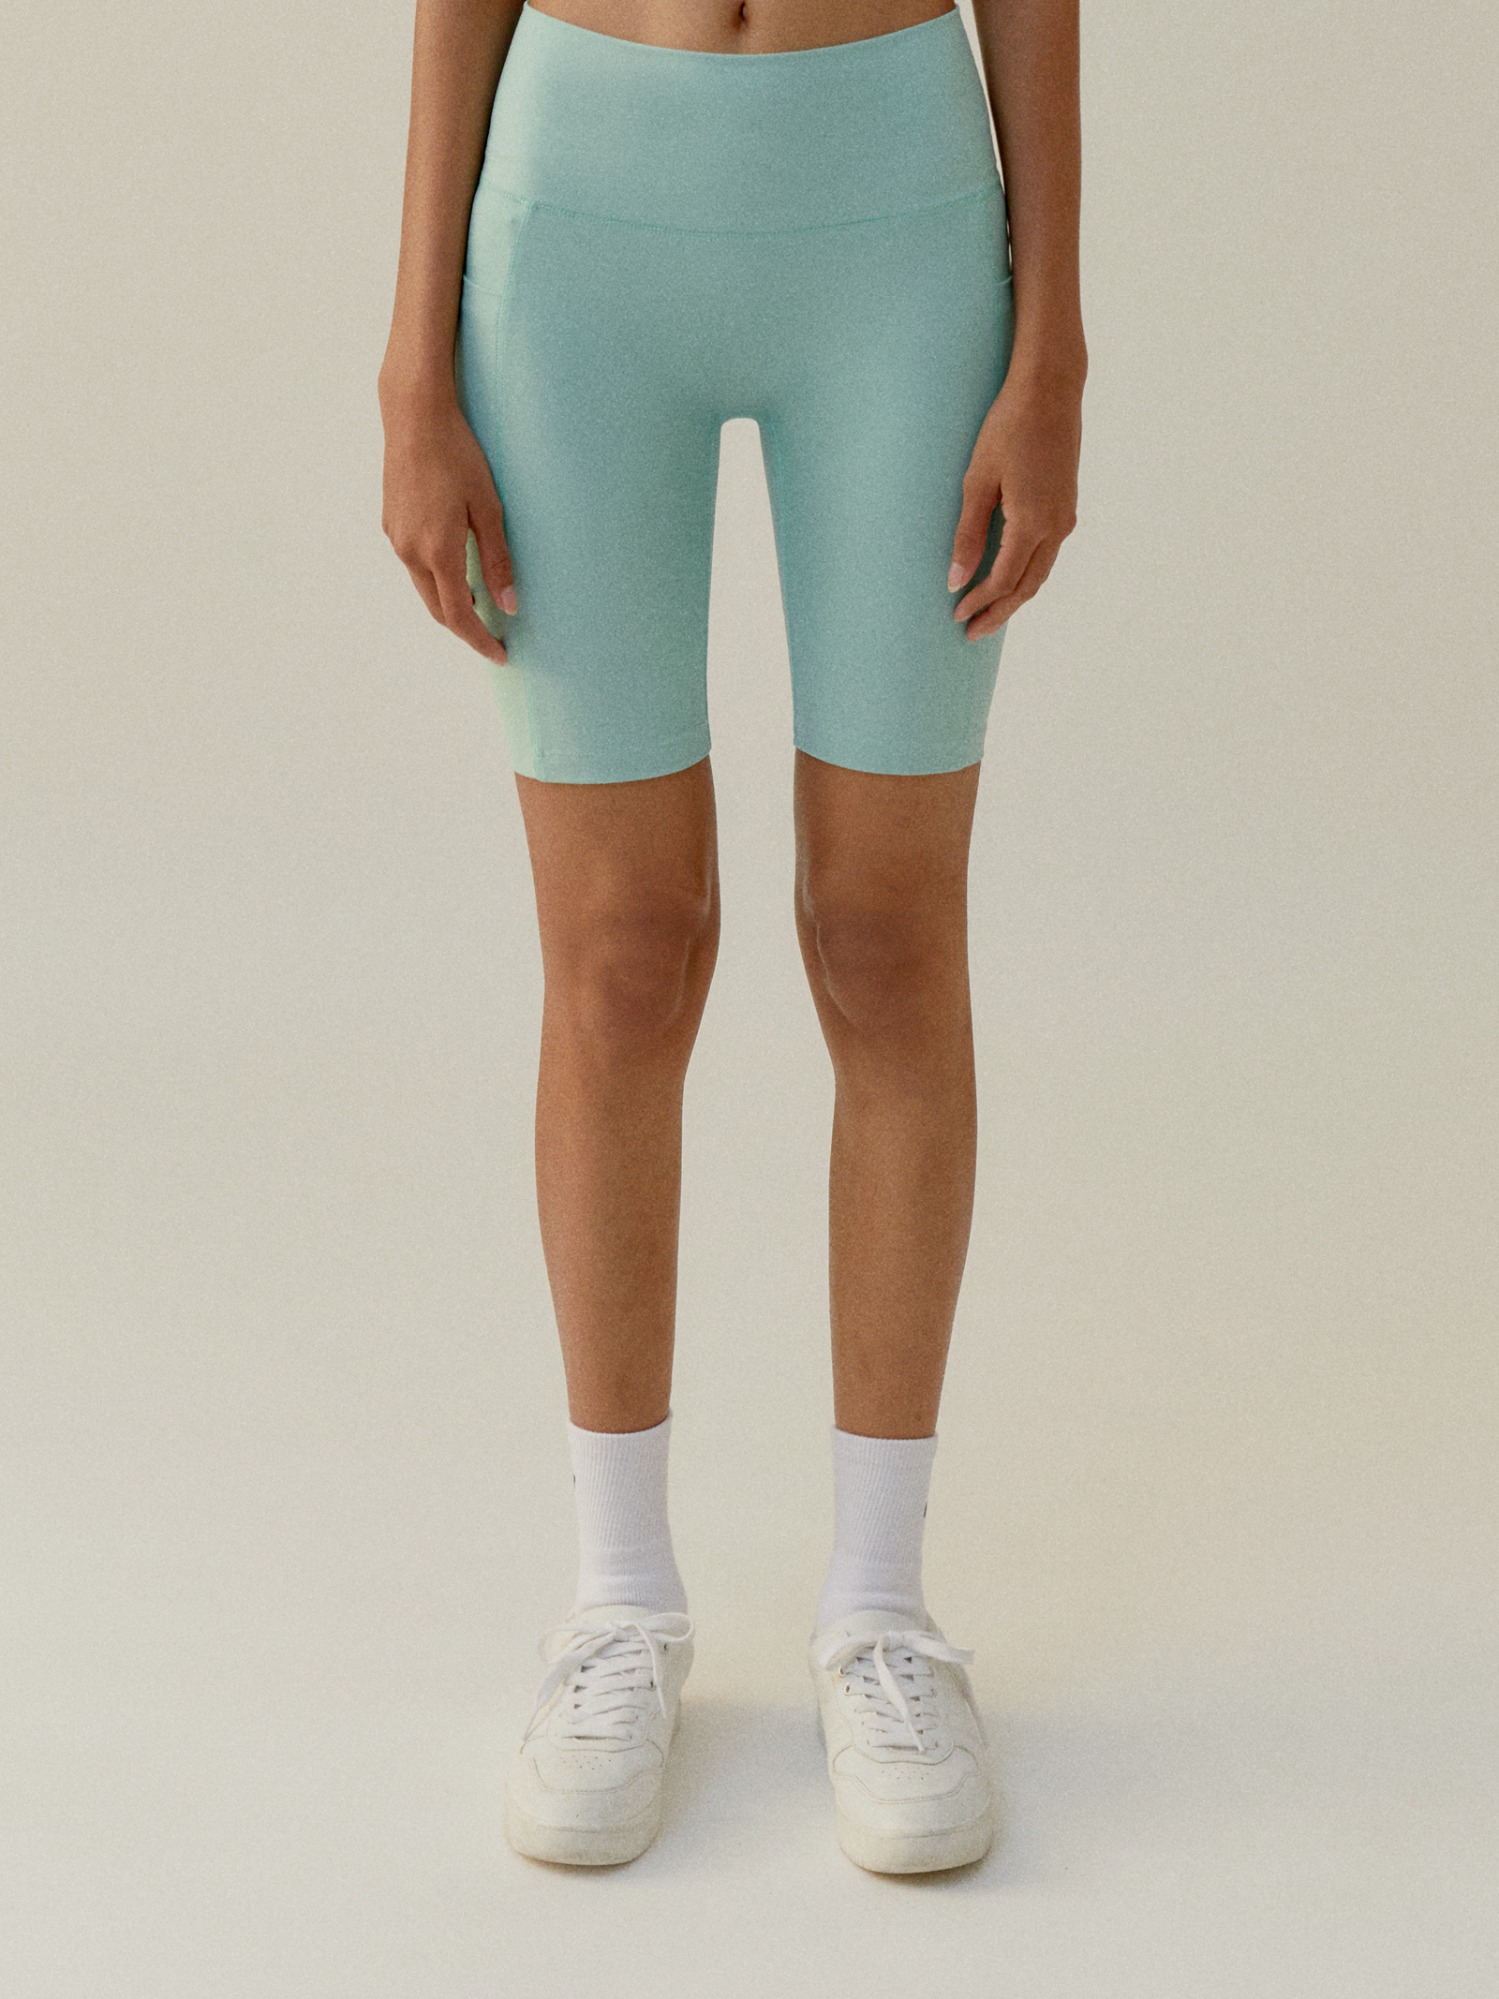 Biker Shorts ∙ Mint